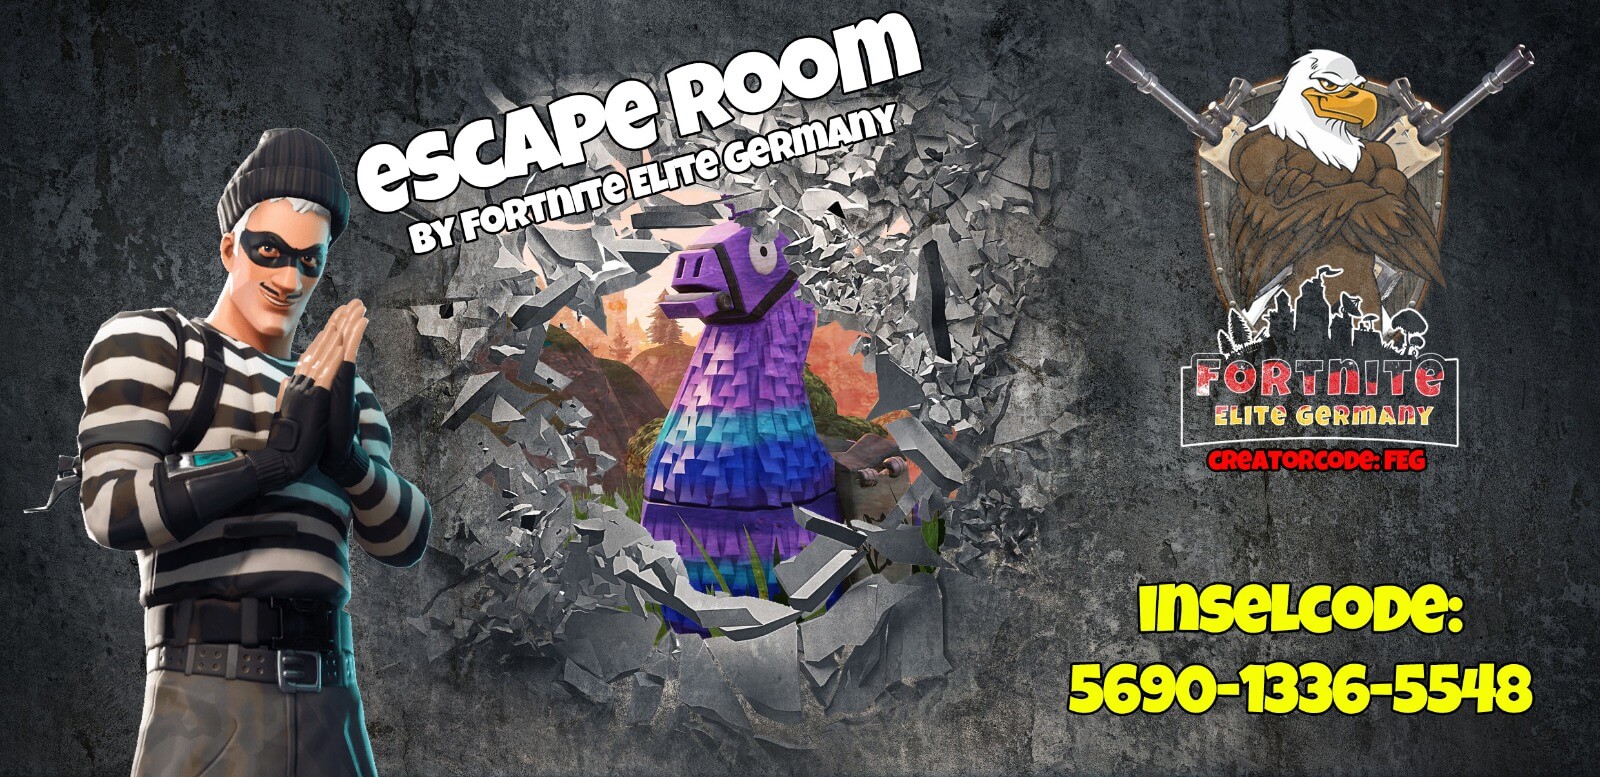 Escape Room By Fortnite Elite Germany Fortnite Creative Map